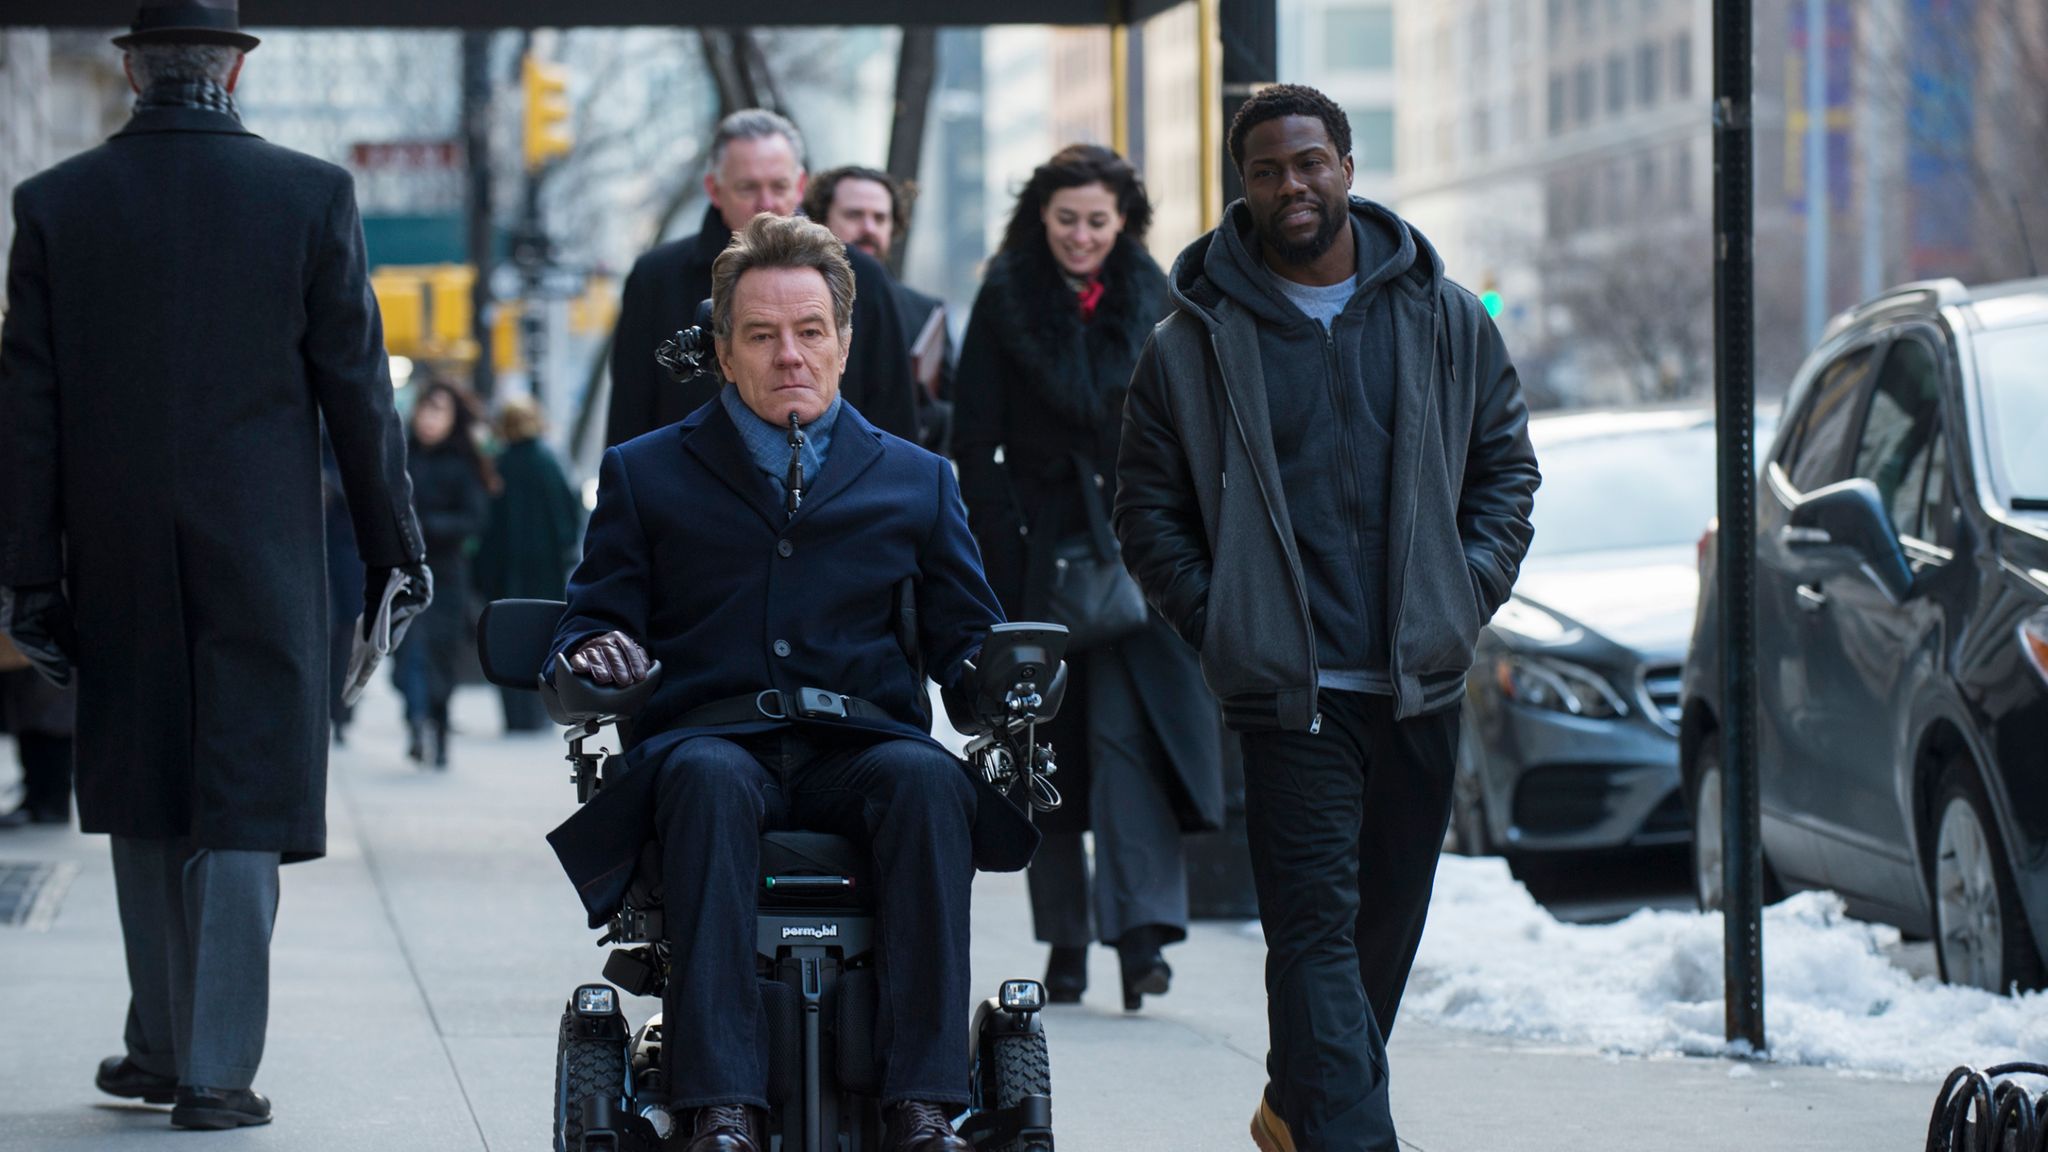 The Upside review – Bryan Cranston heads up horrific odd-couple disability  drama, Drama films